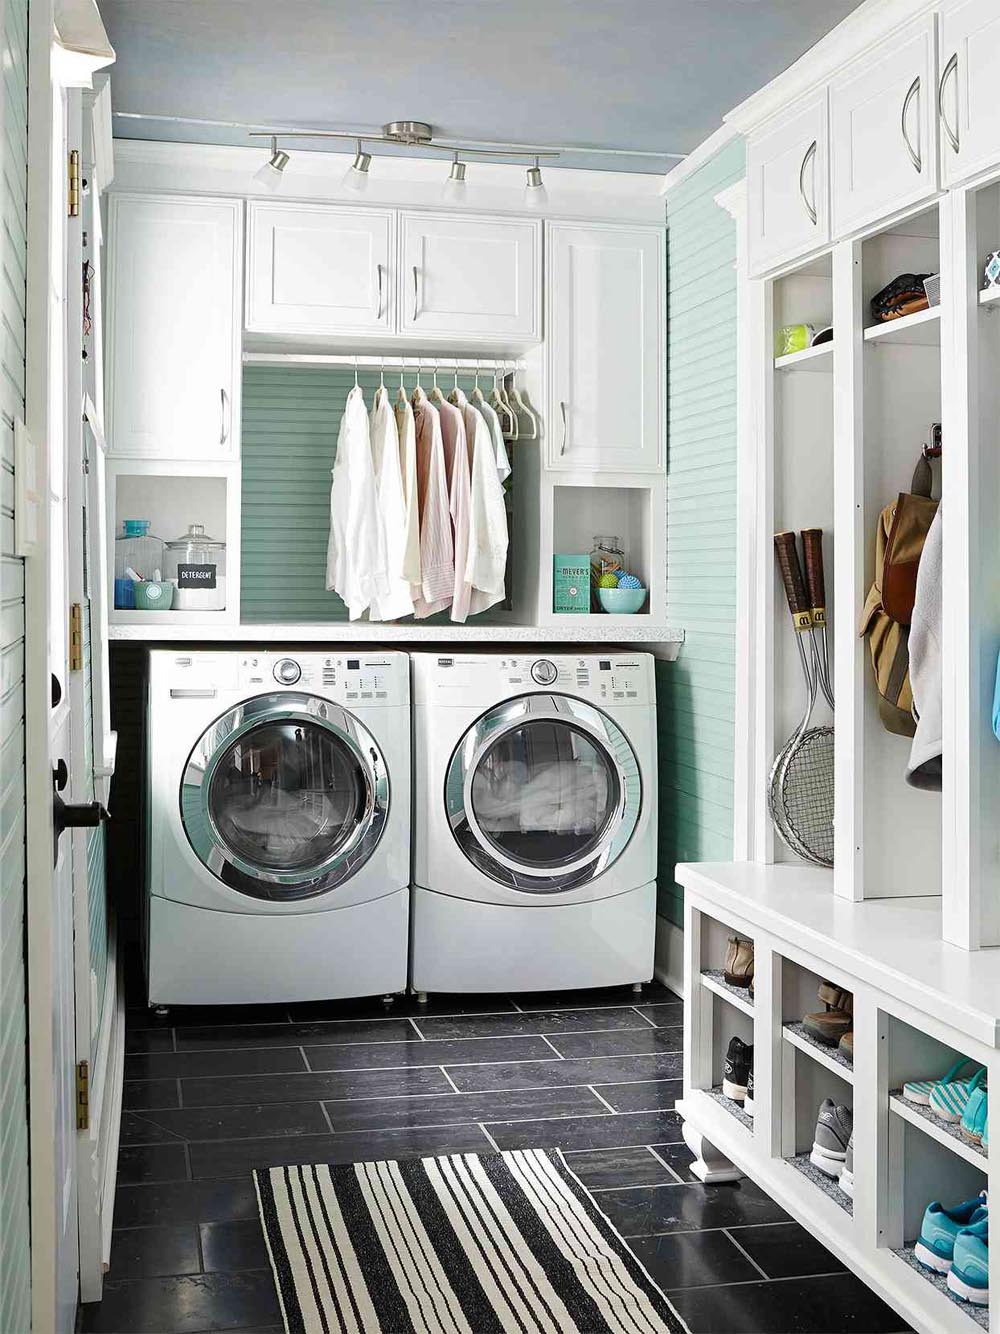 15 Beautiful Laundry Room Ideas - Design Swan